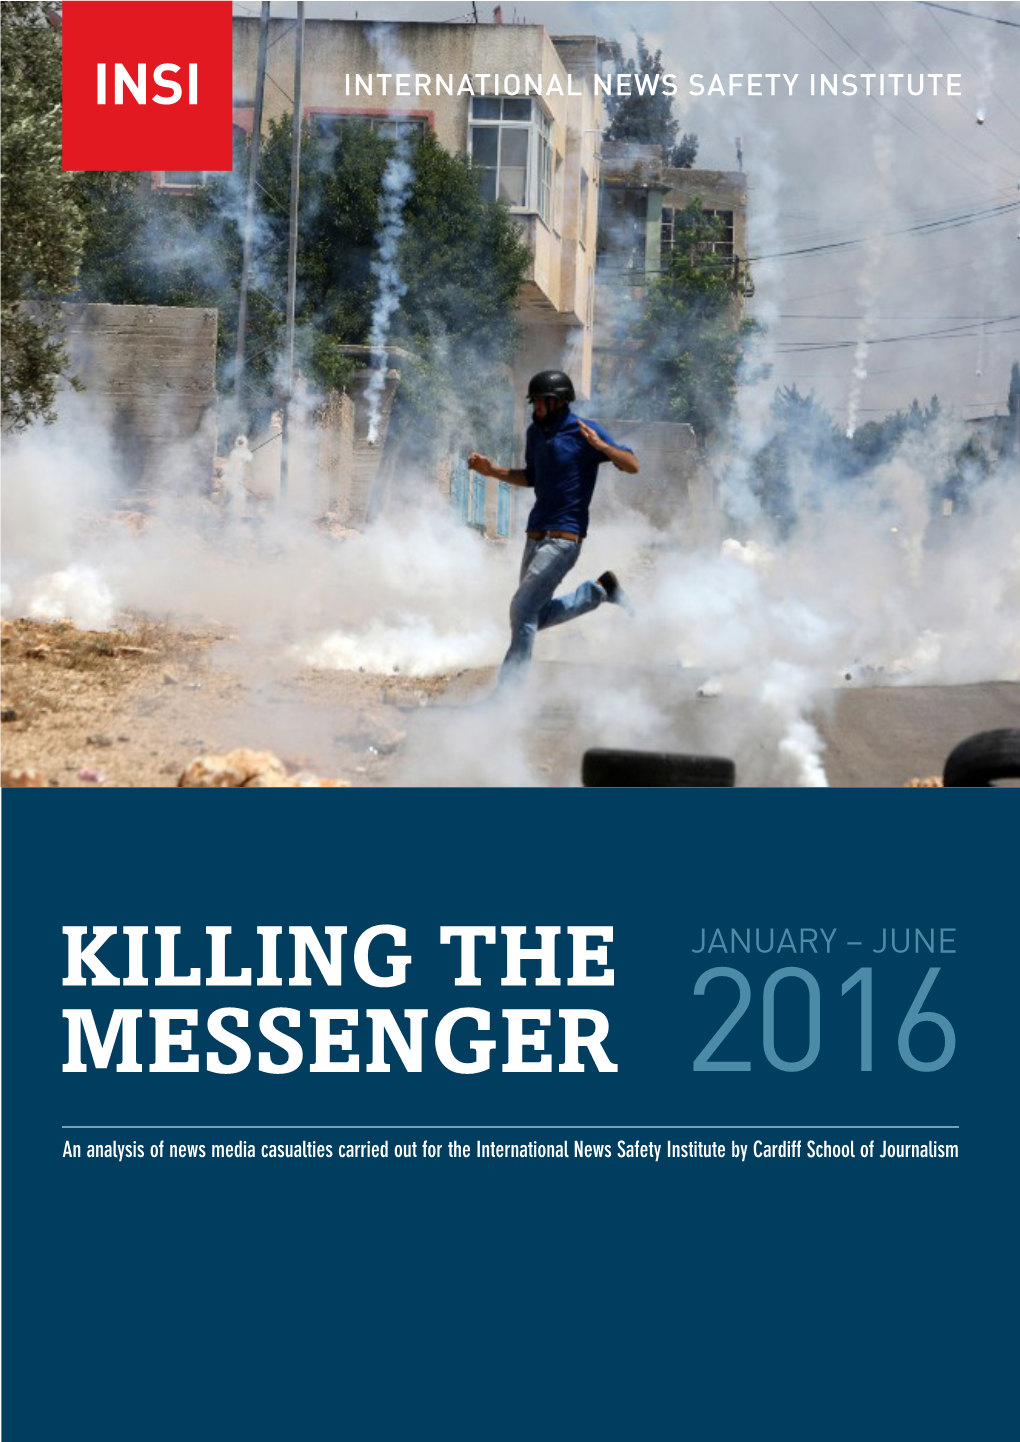 Killing the Messenger